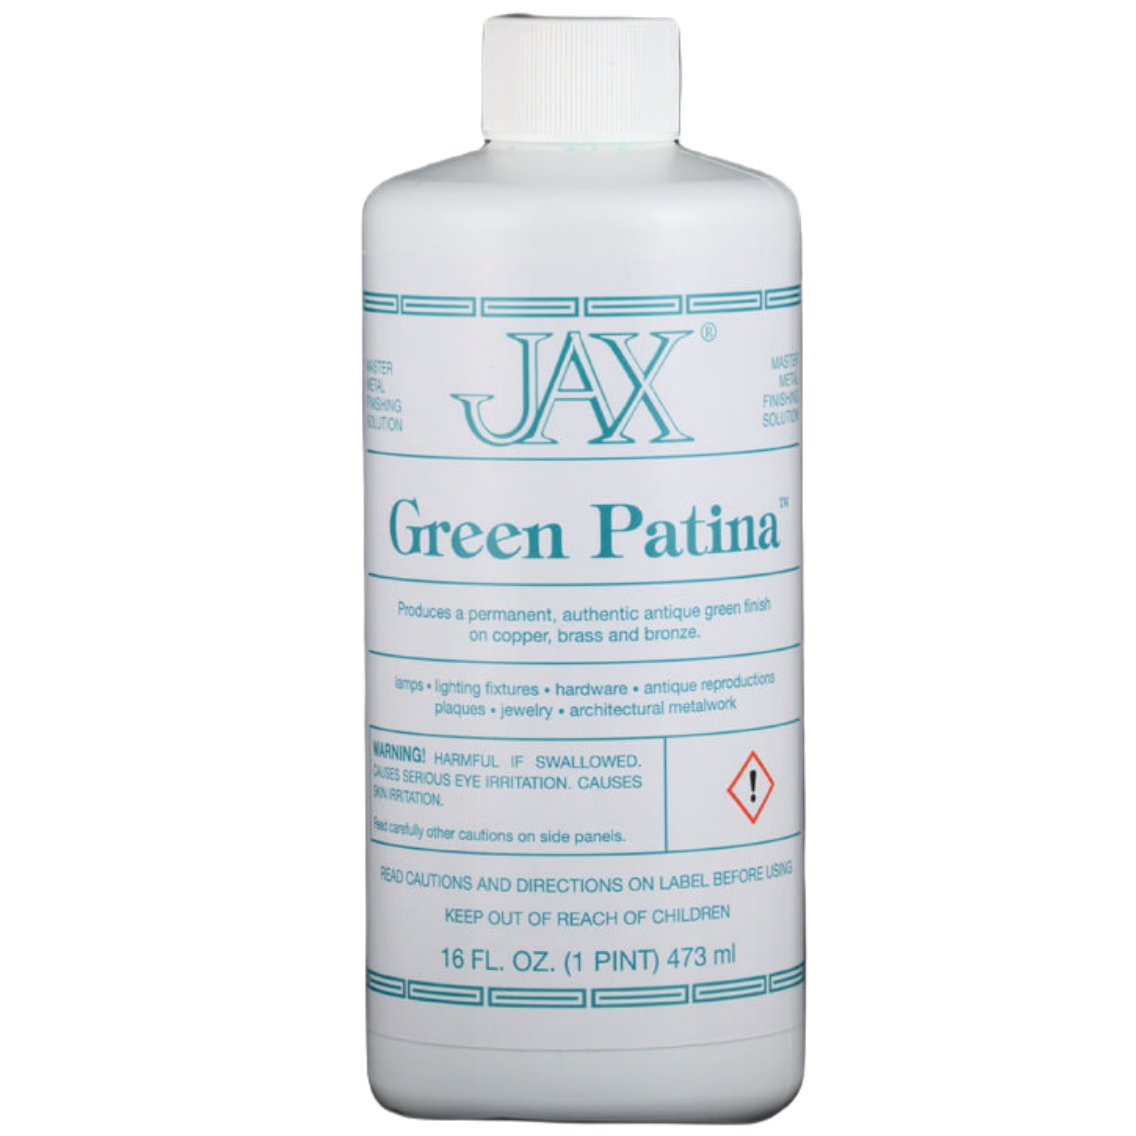 Jax Green Patina